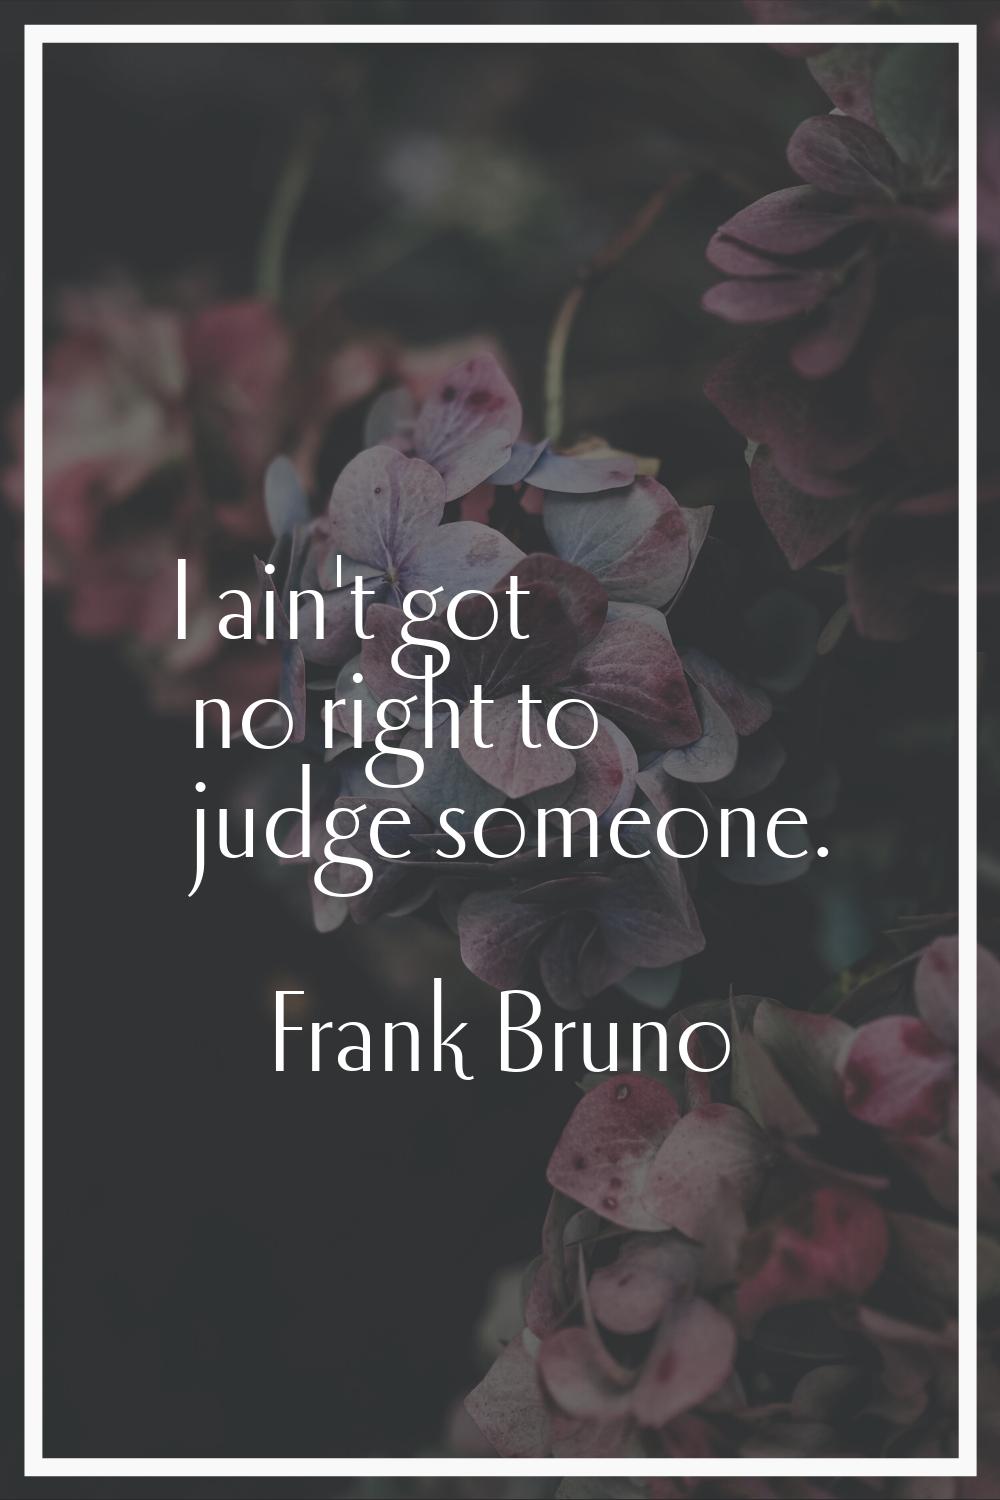 I ain't got no right to judge someone.